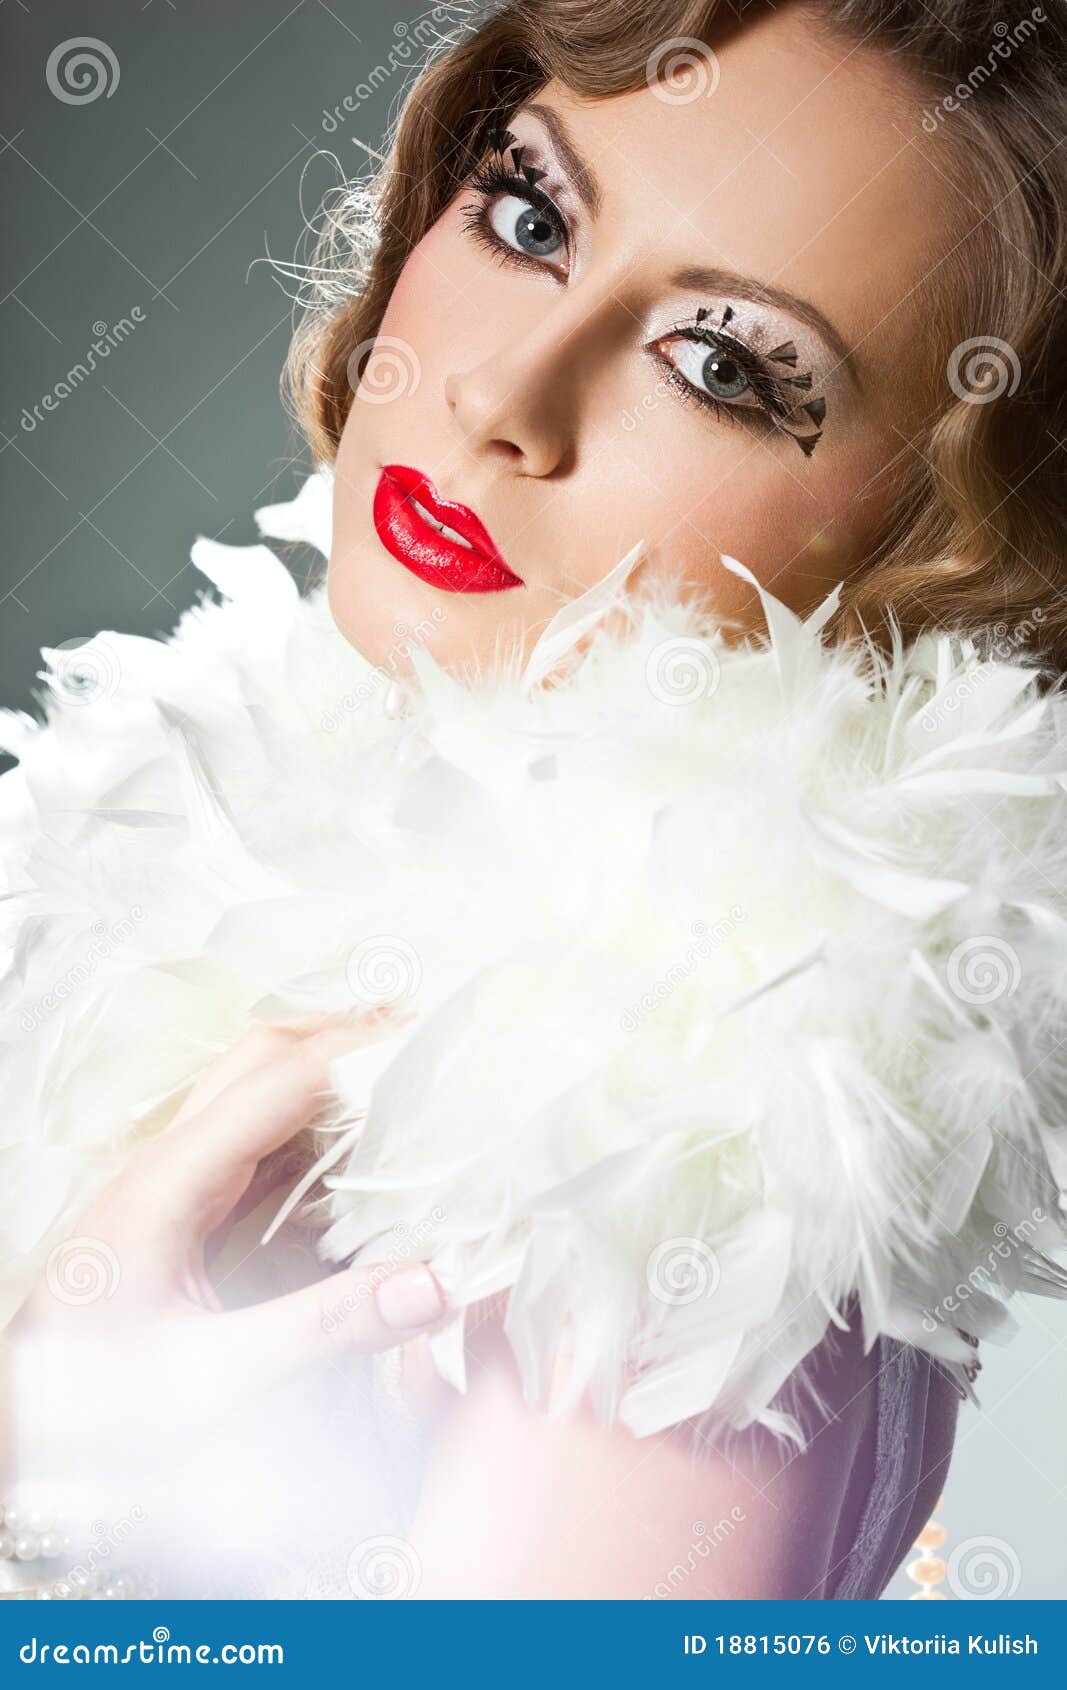 woman with art visage - burlesque